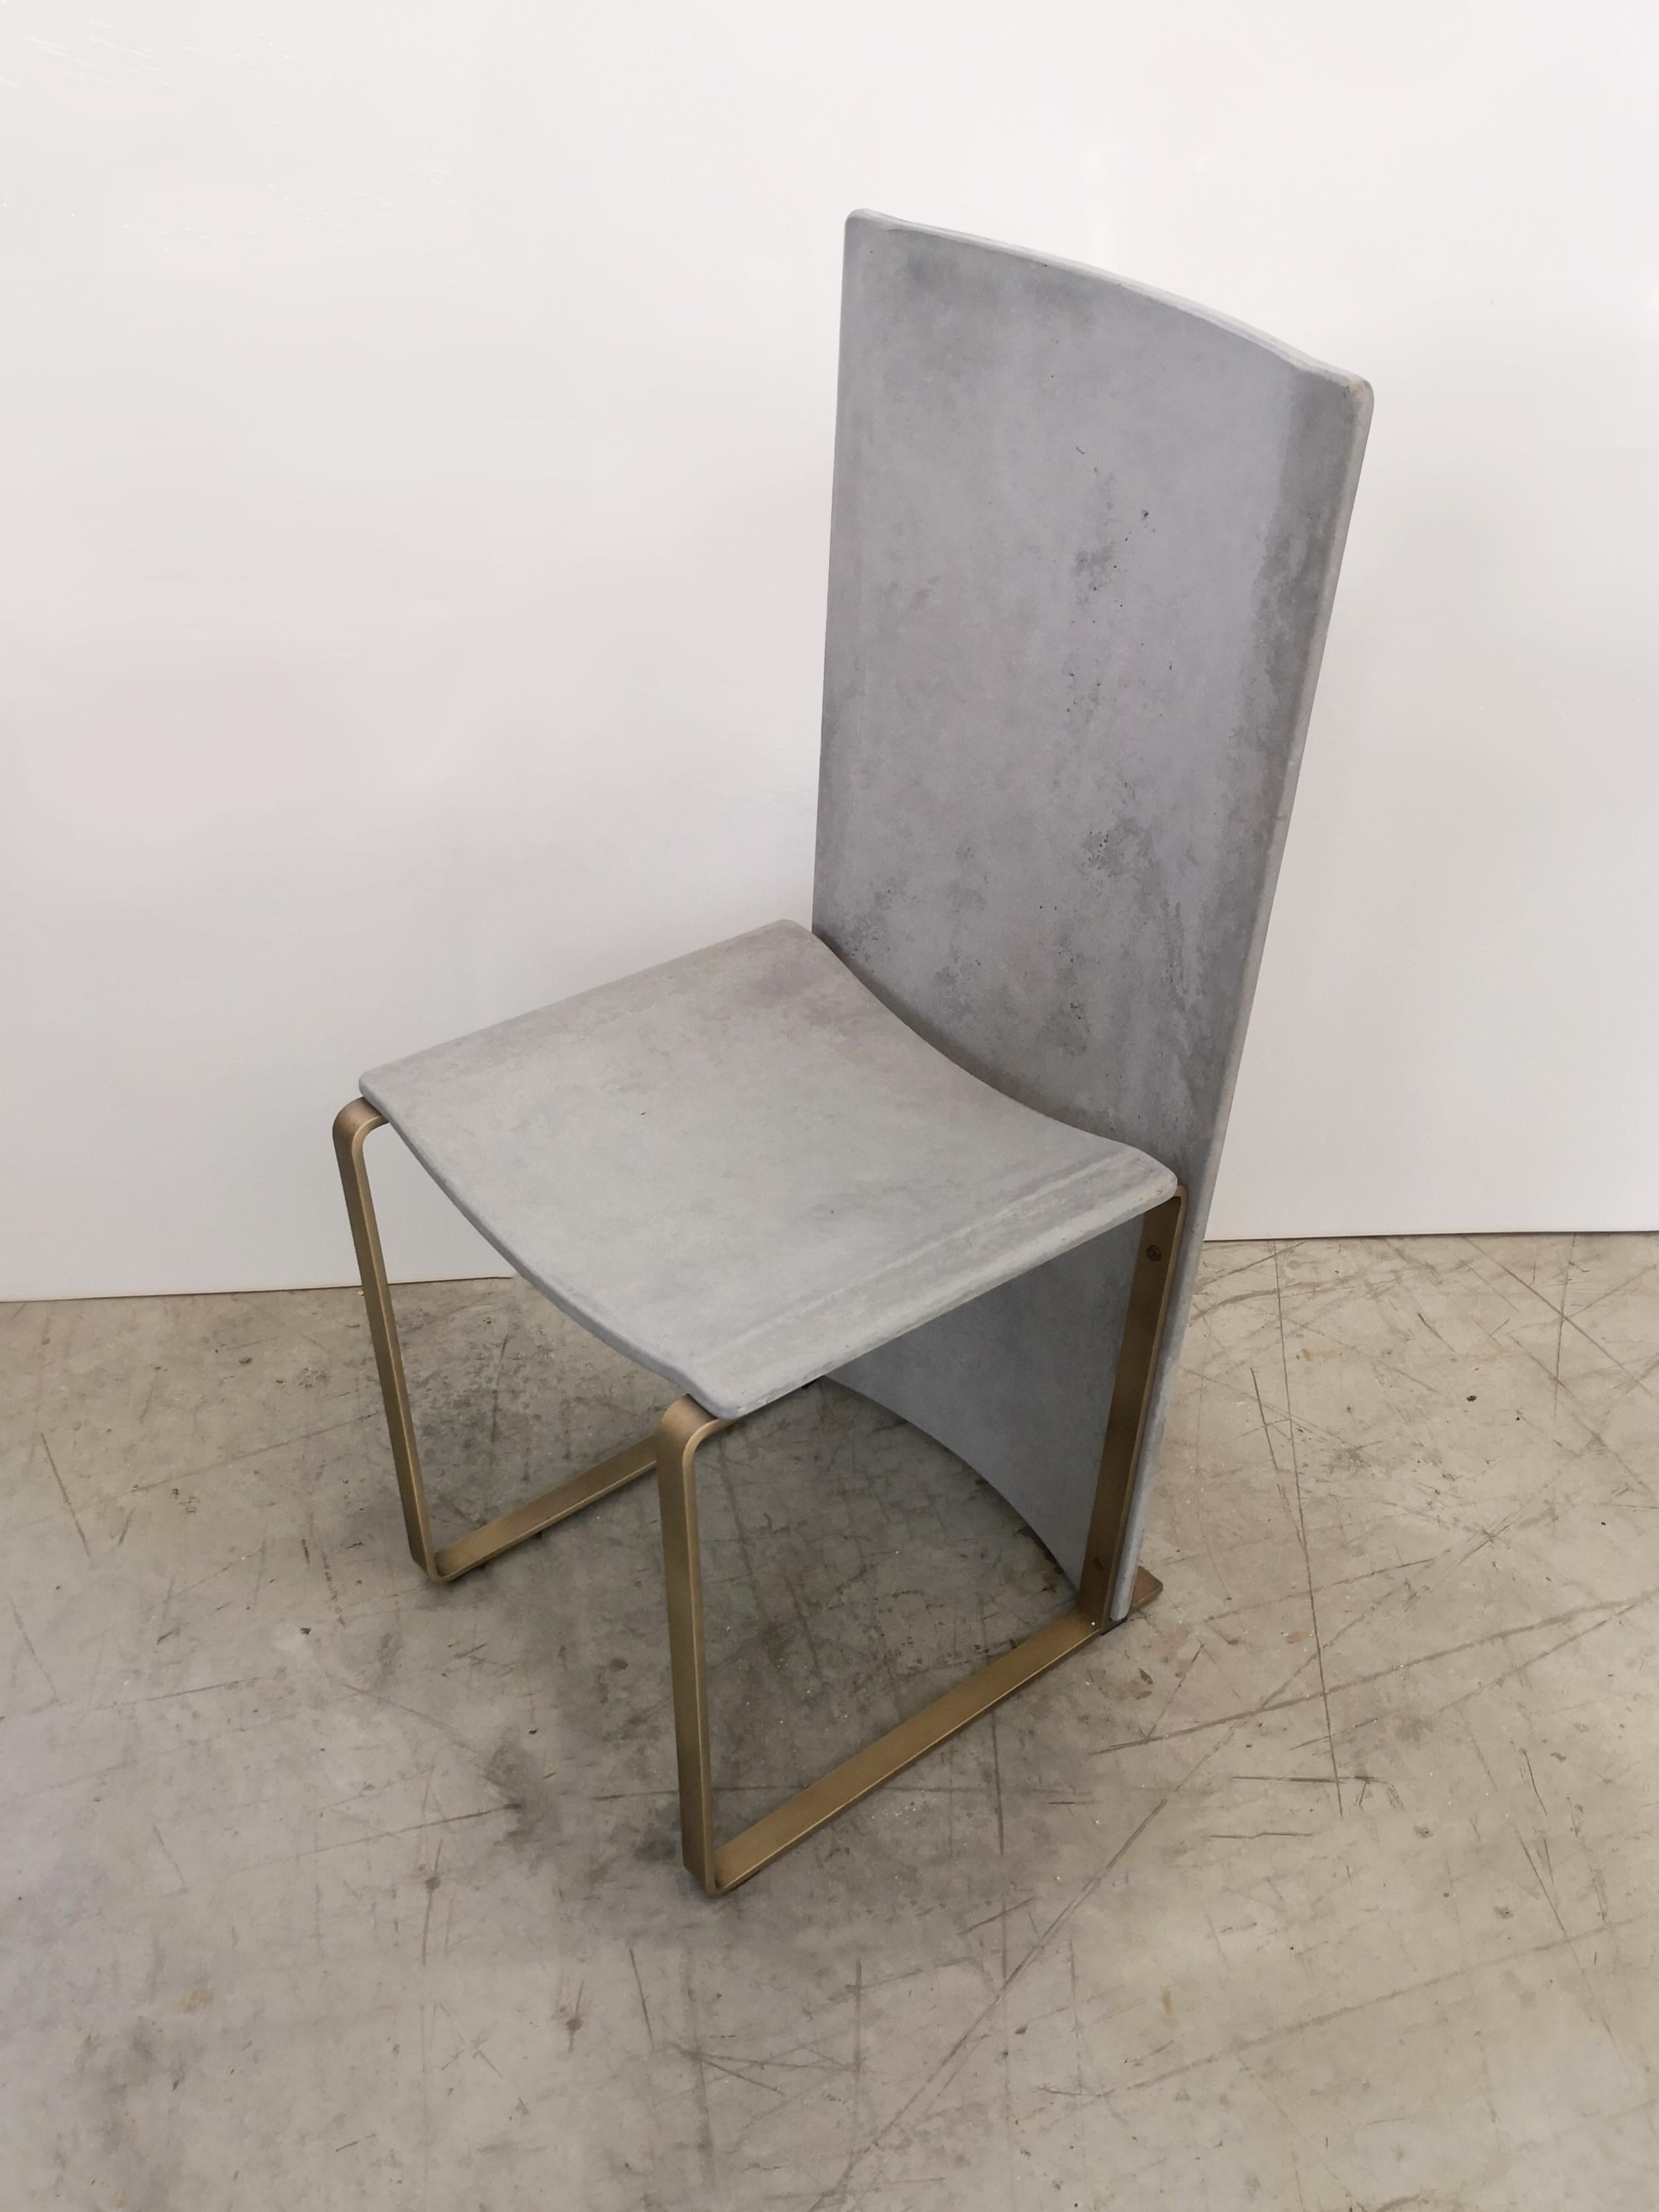 Rubeda concrete chair design Roberto Giacomucci 2018 In Excellent Condition For Sale In ancona, IT